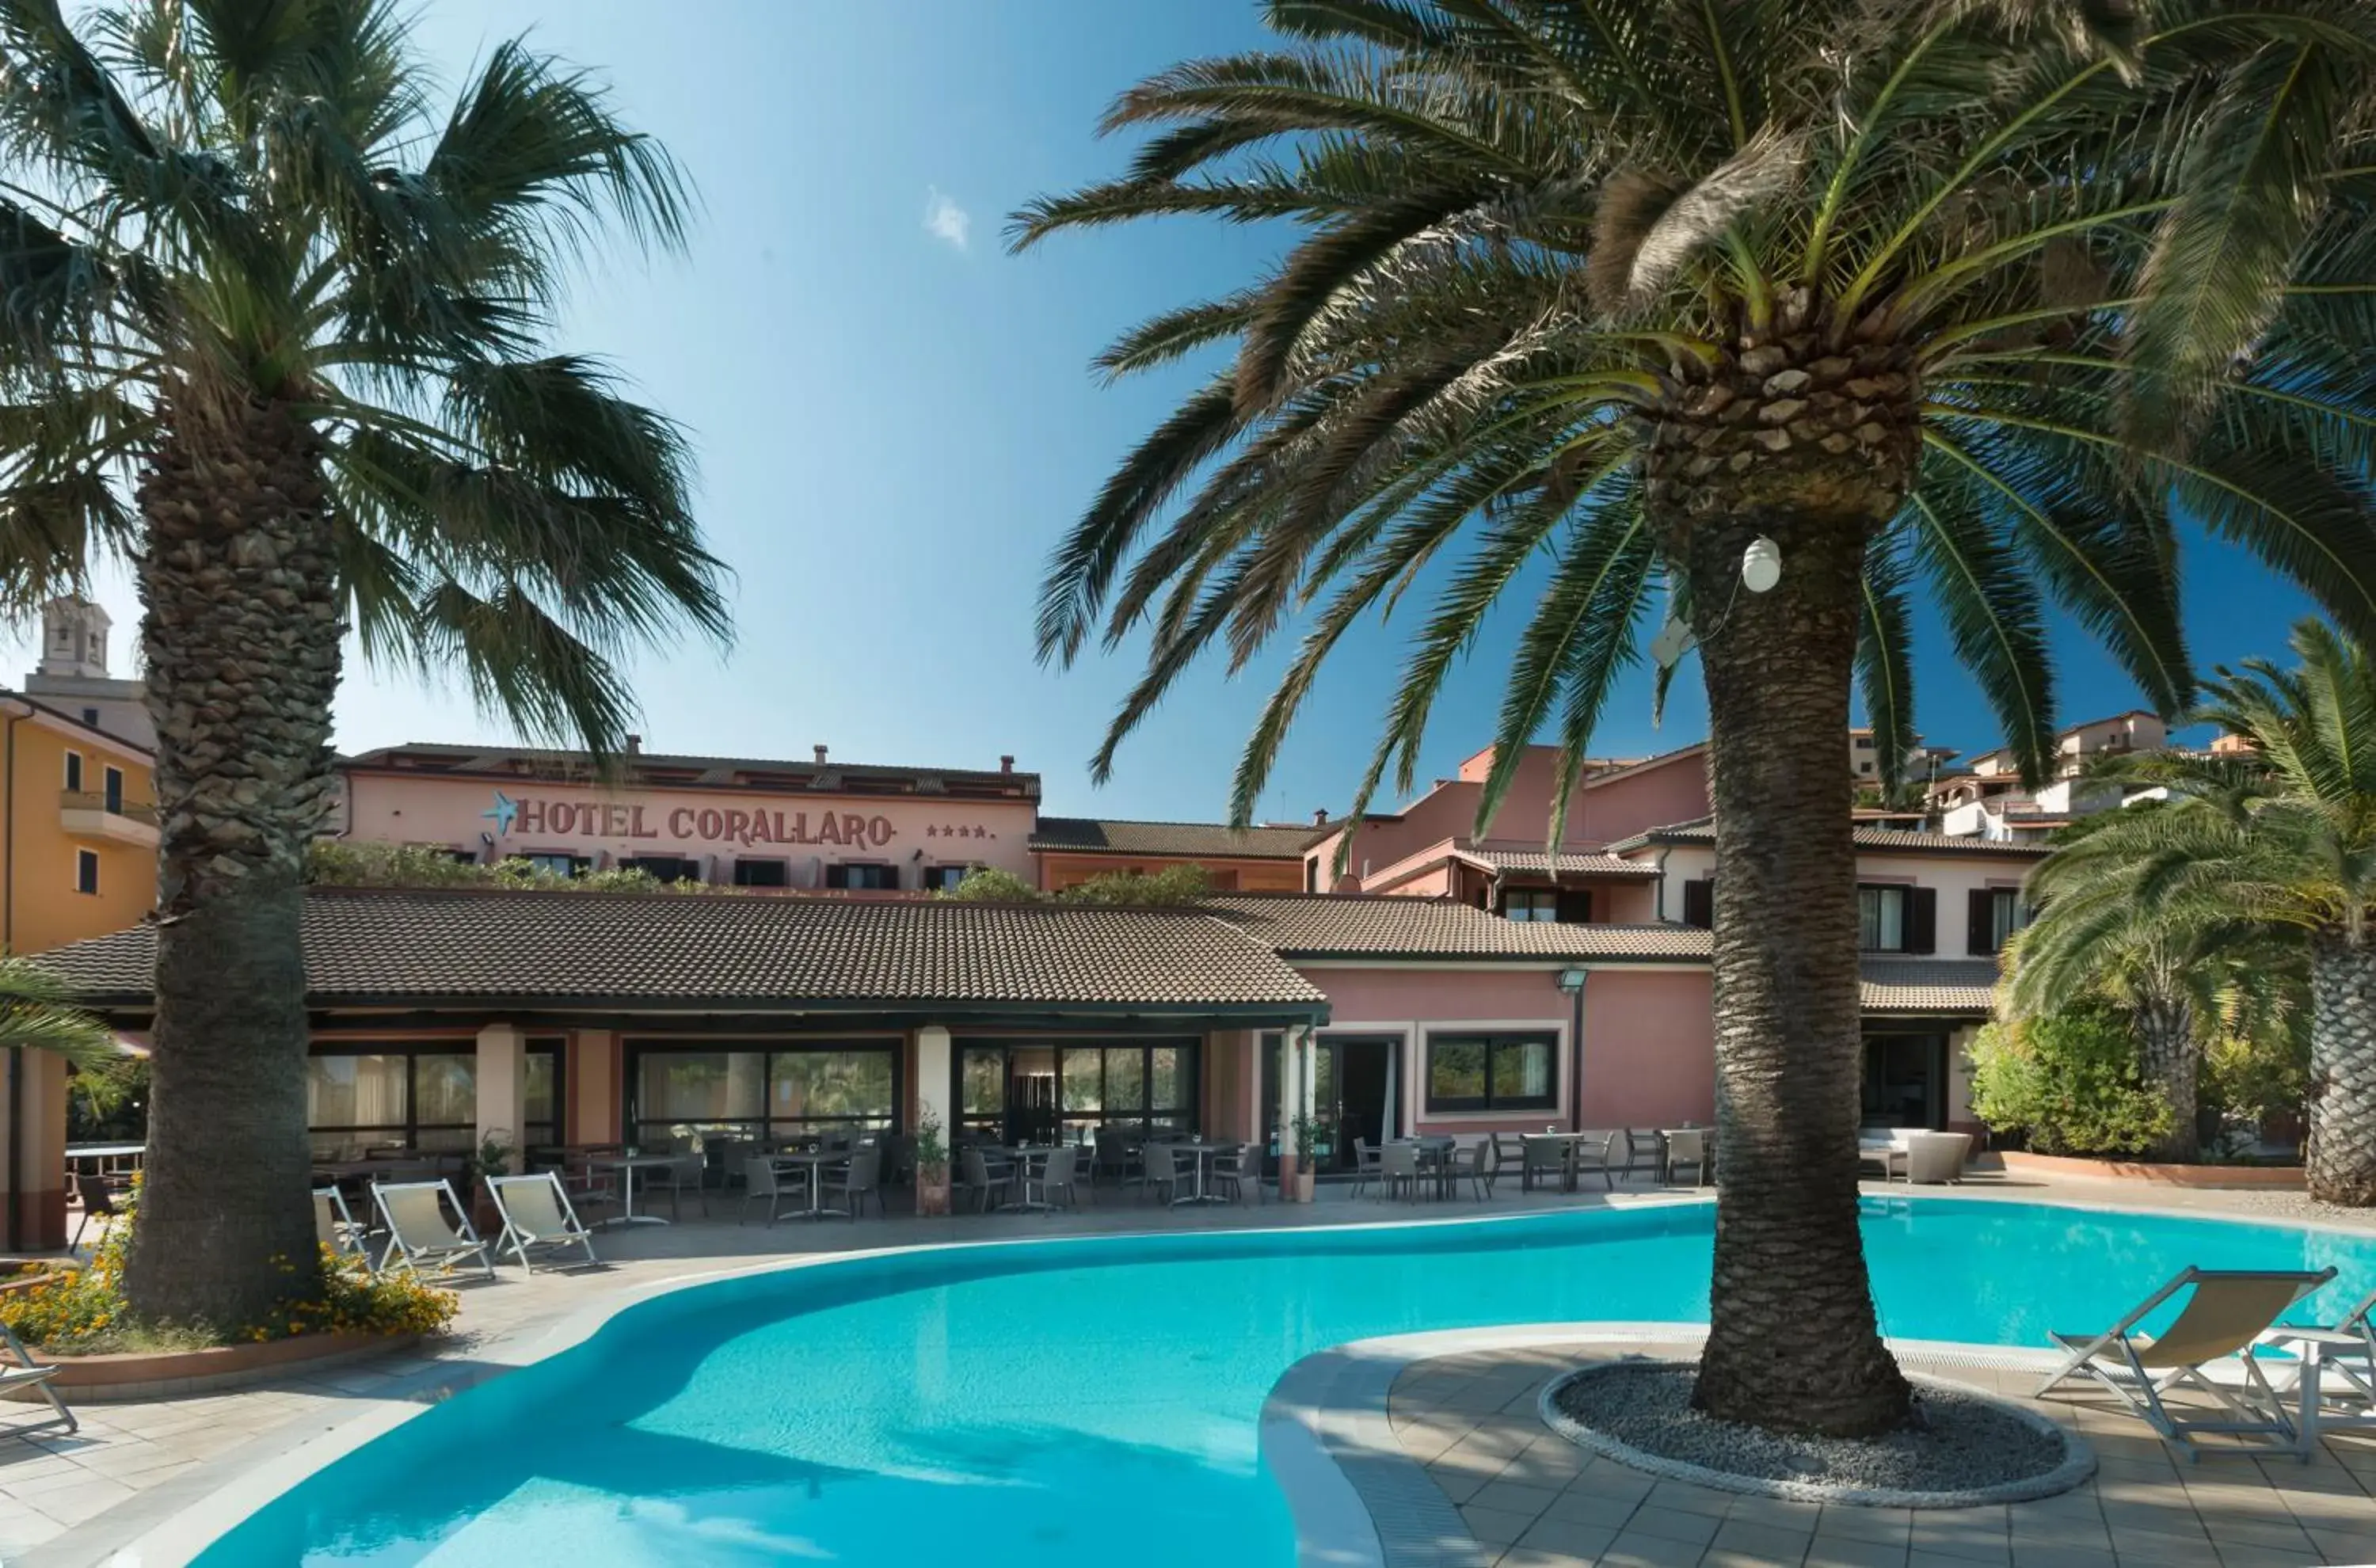 Property building, Swimming Pool in Hotel Corallaro